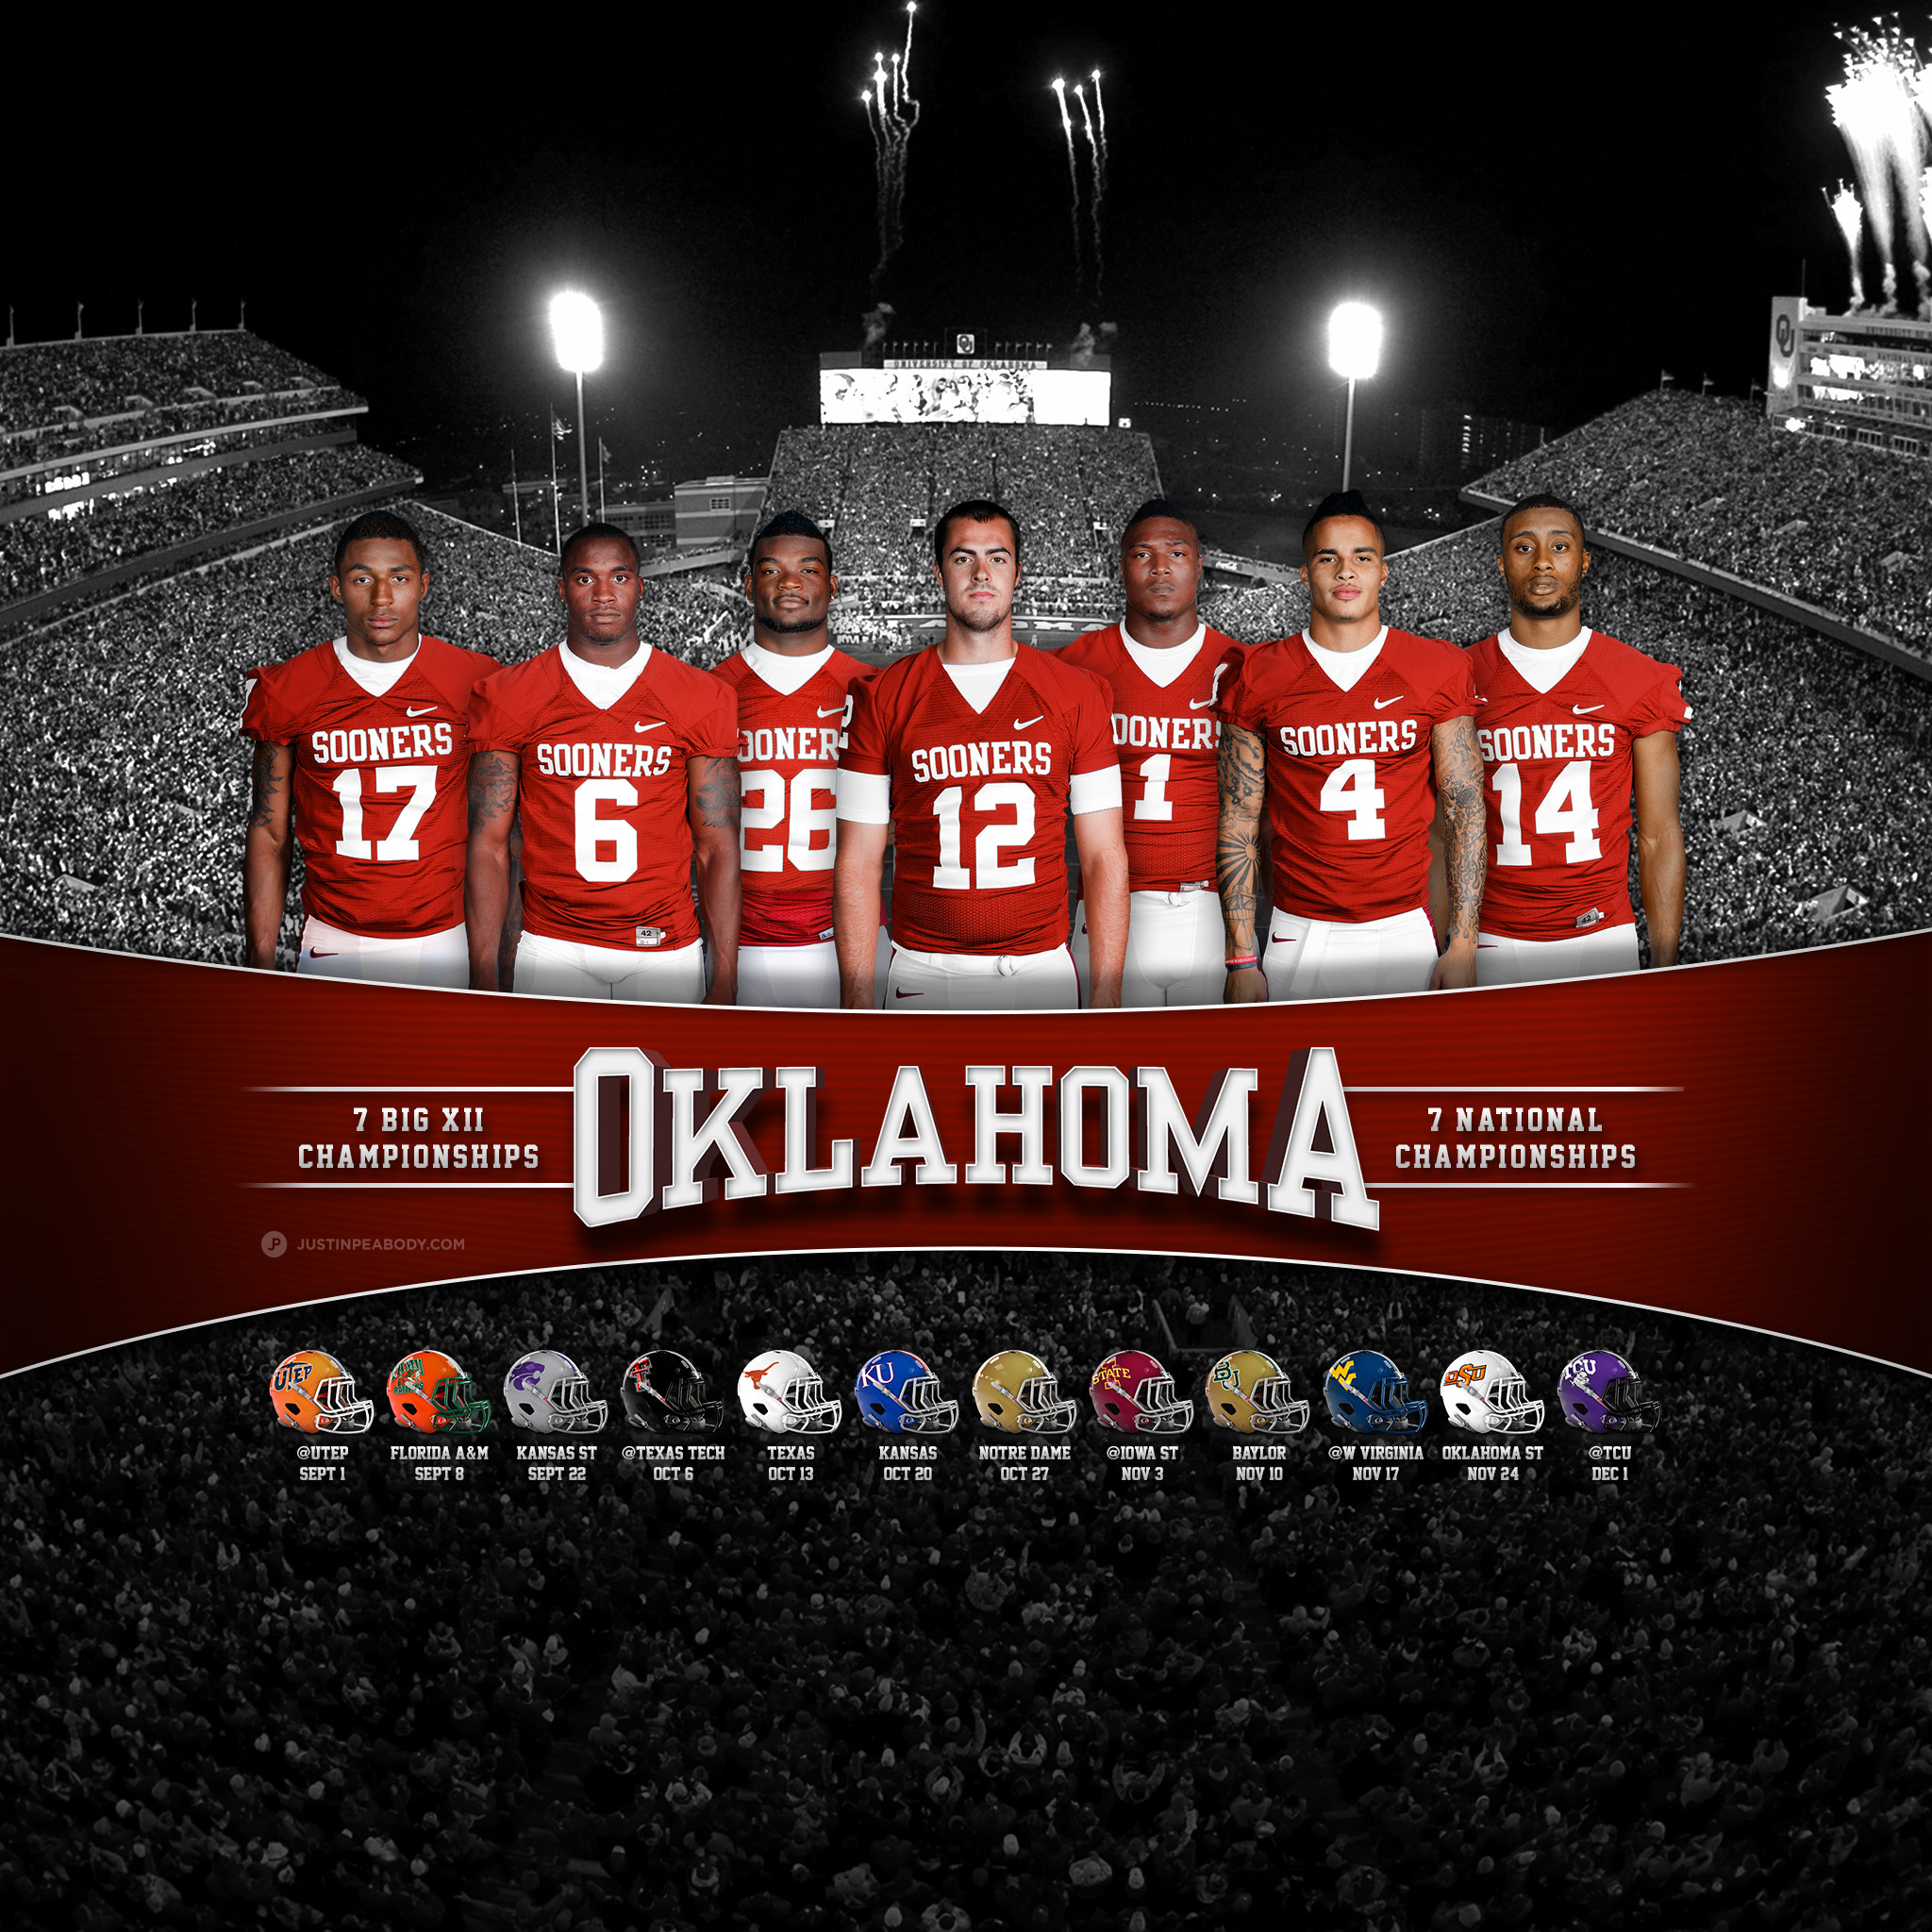 OU Football Media Guide - University of Oklahoma